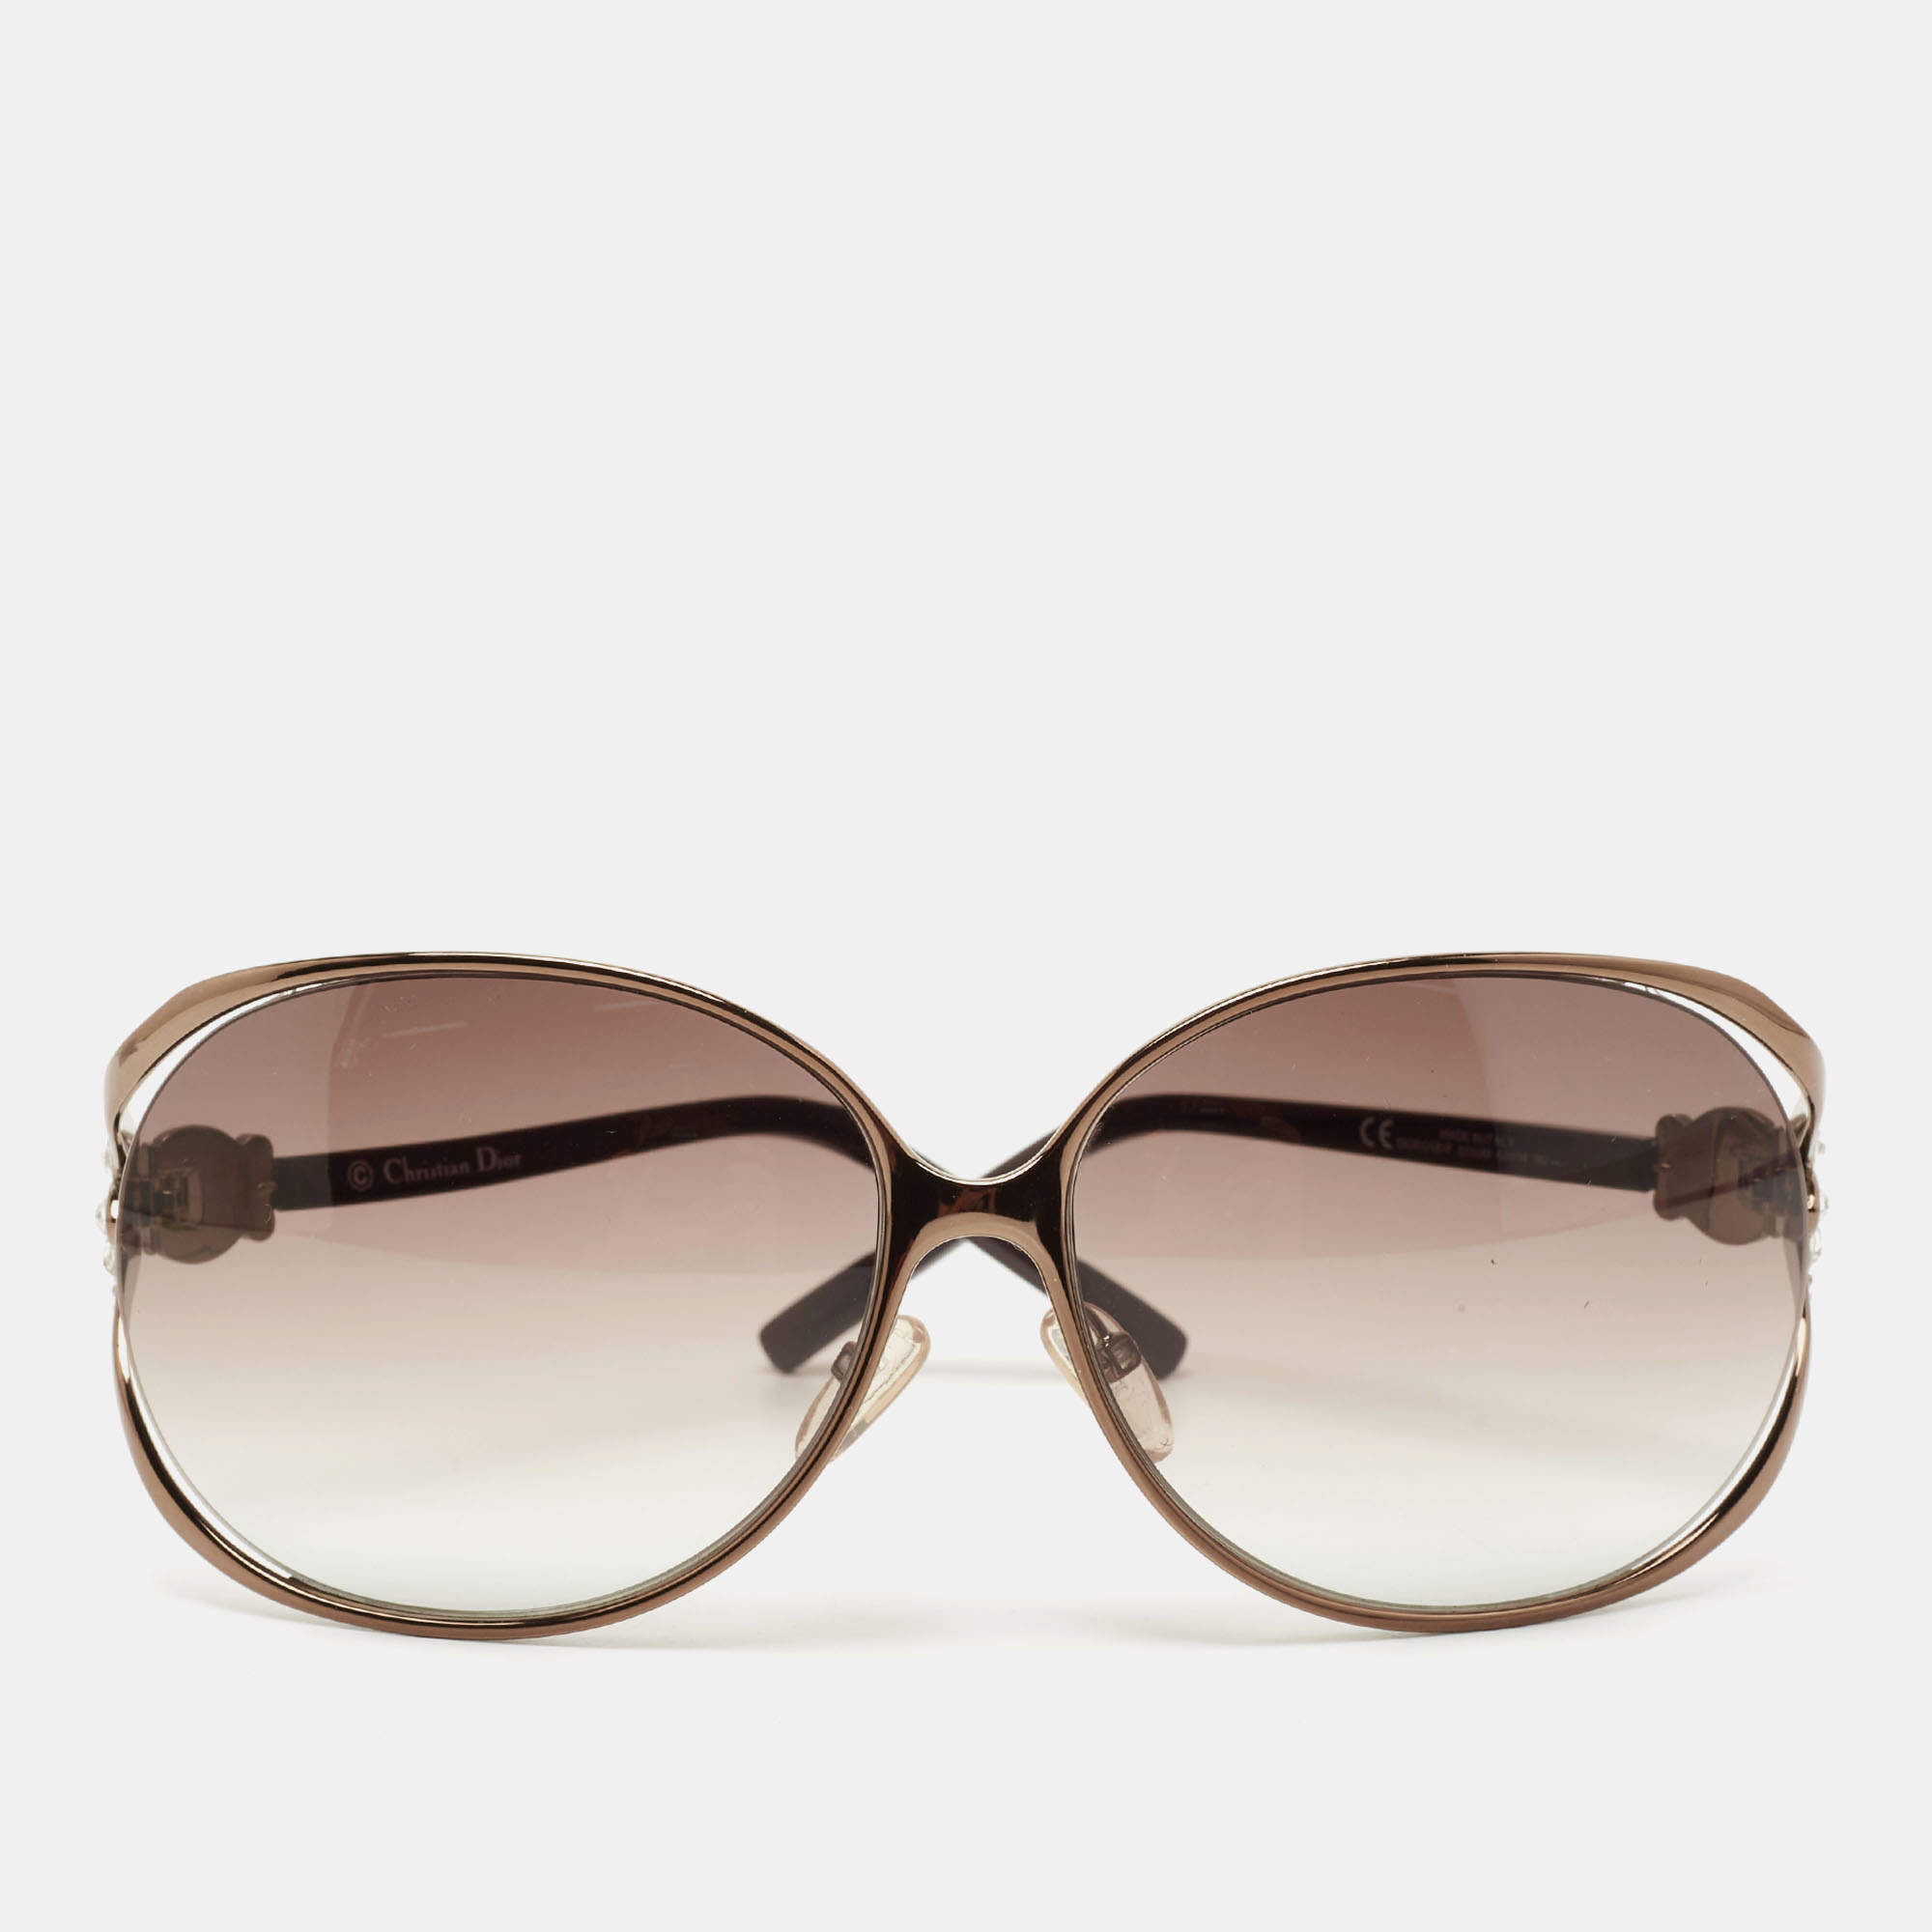 Dior designer sunglasses for summer